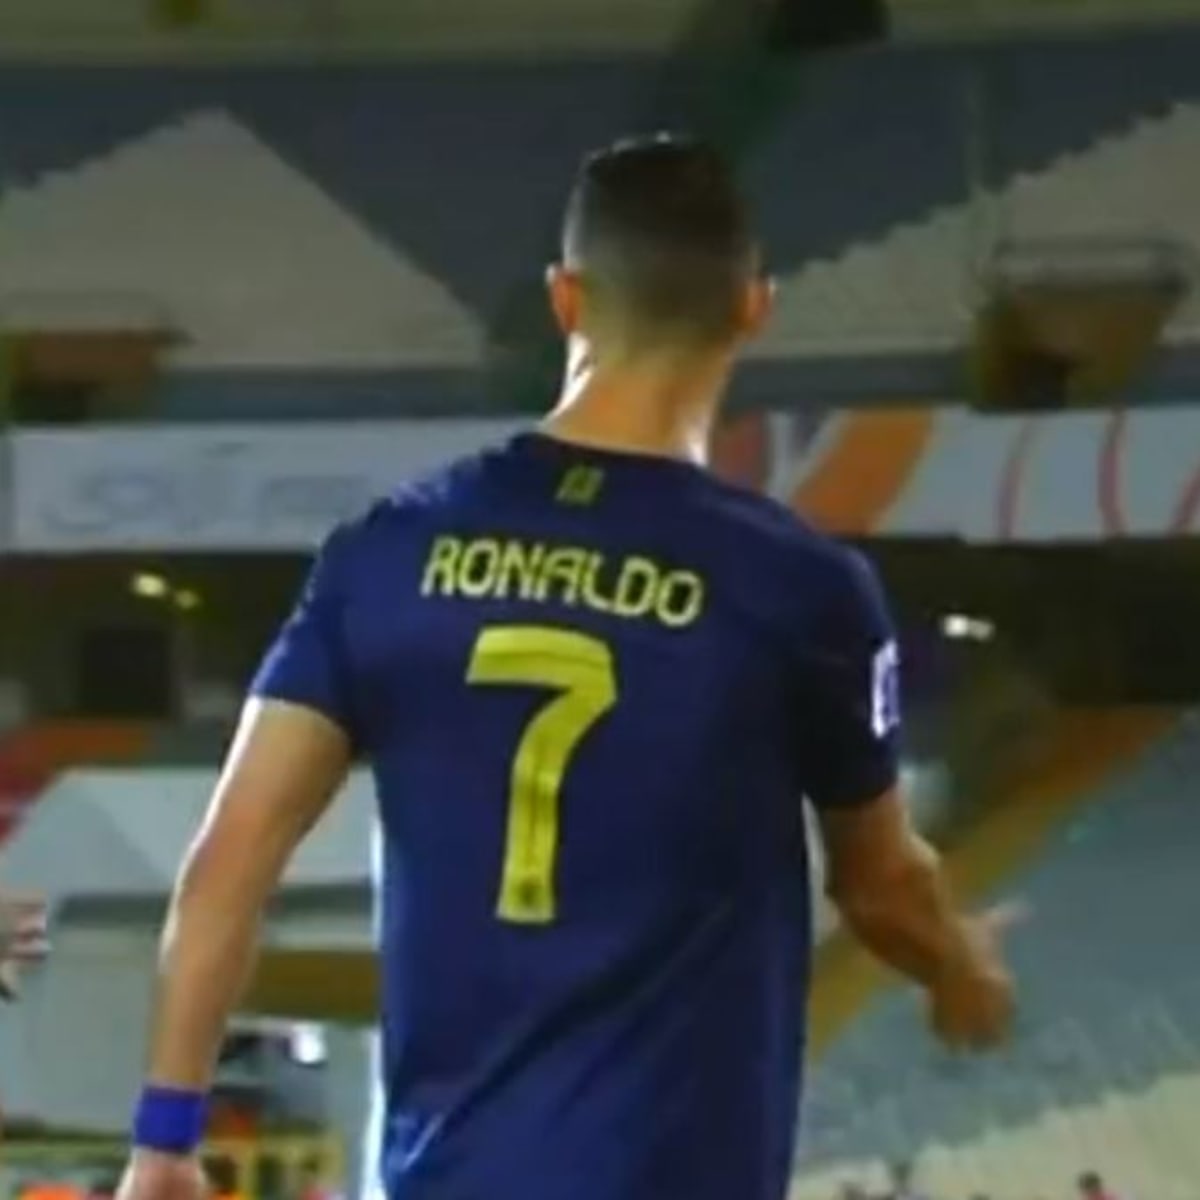 Cristiano Ronaldo's Al-Nassr to face Persepolis in Asian Champions League  opener